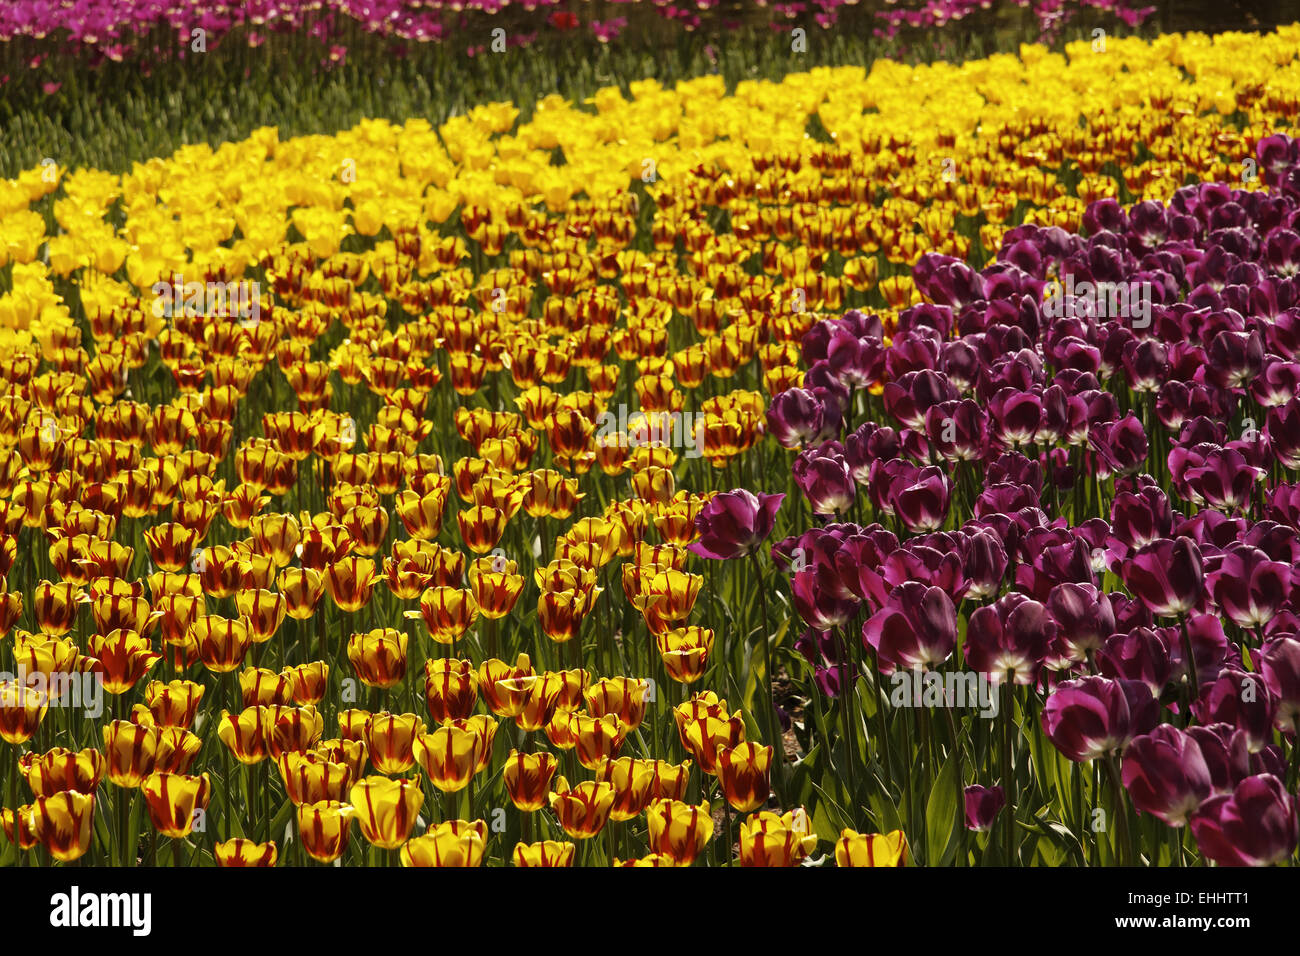 Triumph tulip Helmar (on the right side) Stock Photo